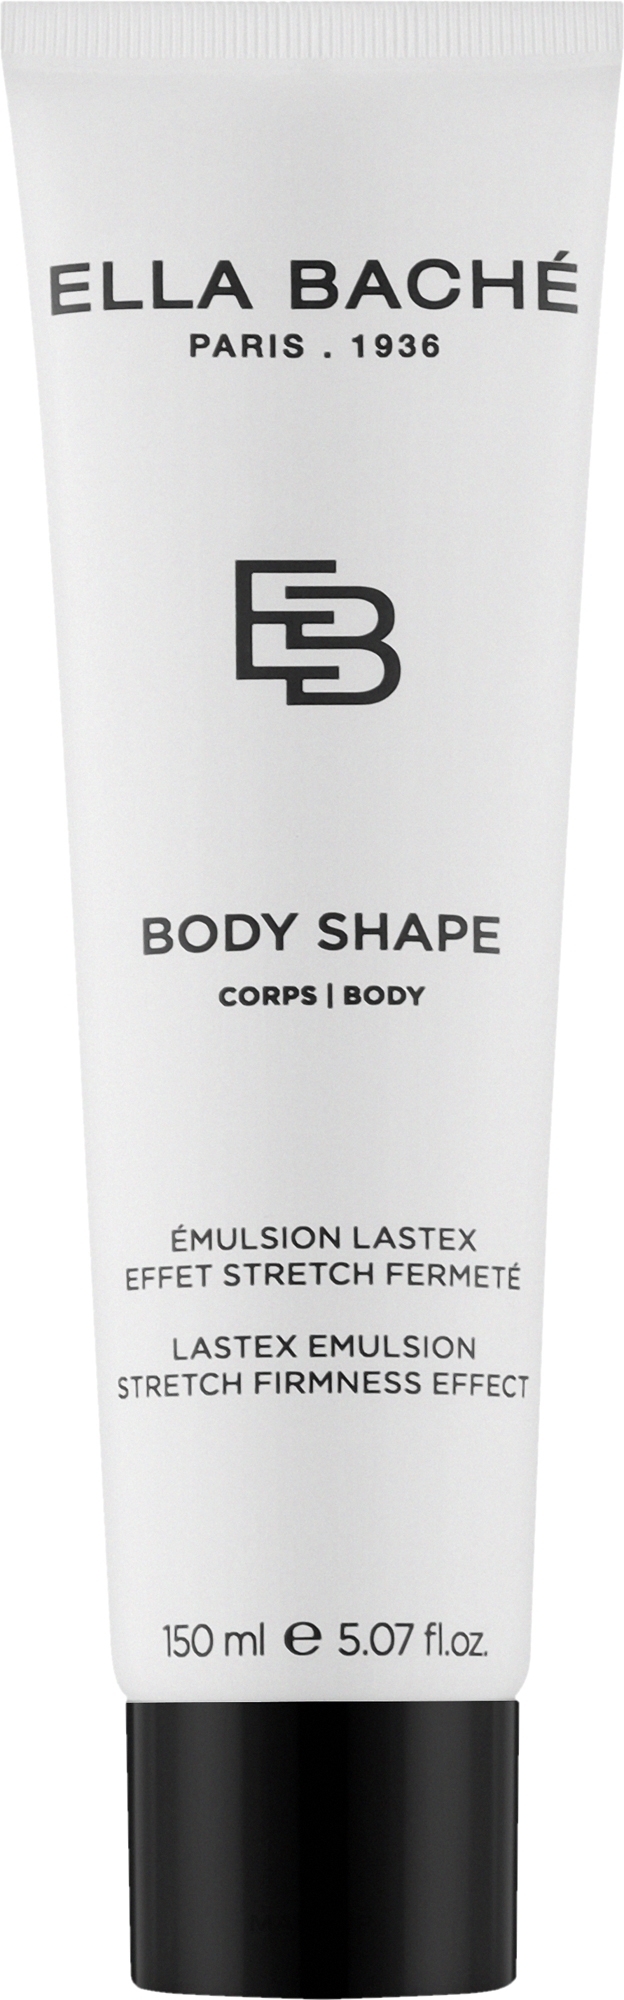 Зміцнювальна емульсія для тіла - Ella Bache Body Shape Lastex Emulsion Stretch Firmness Effect — фото 180ml